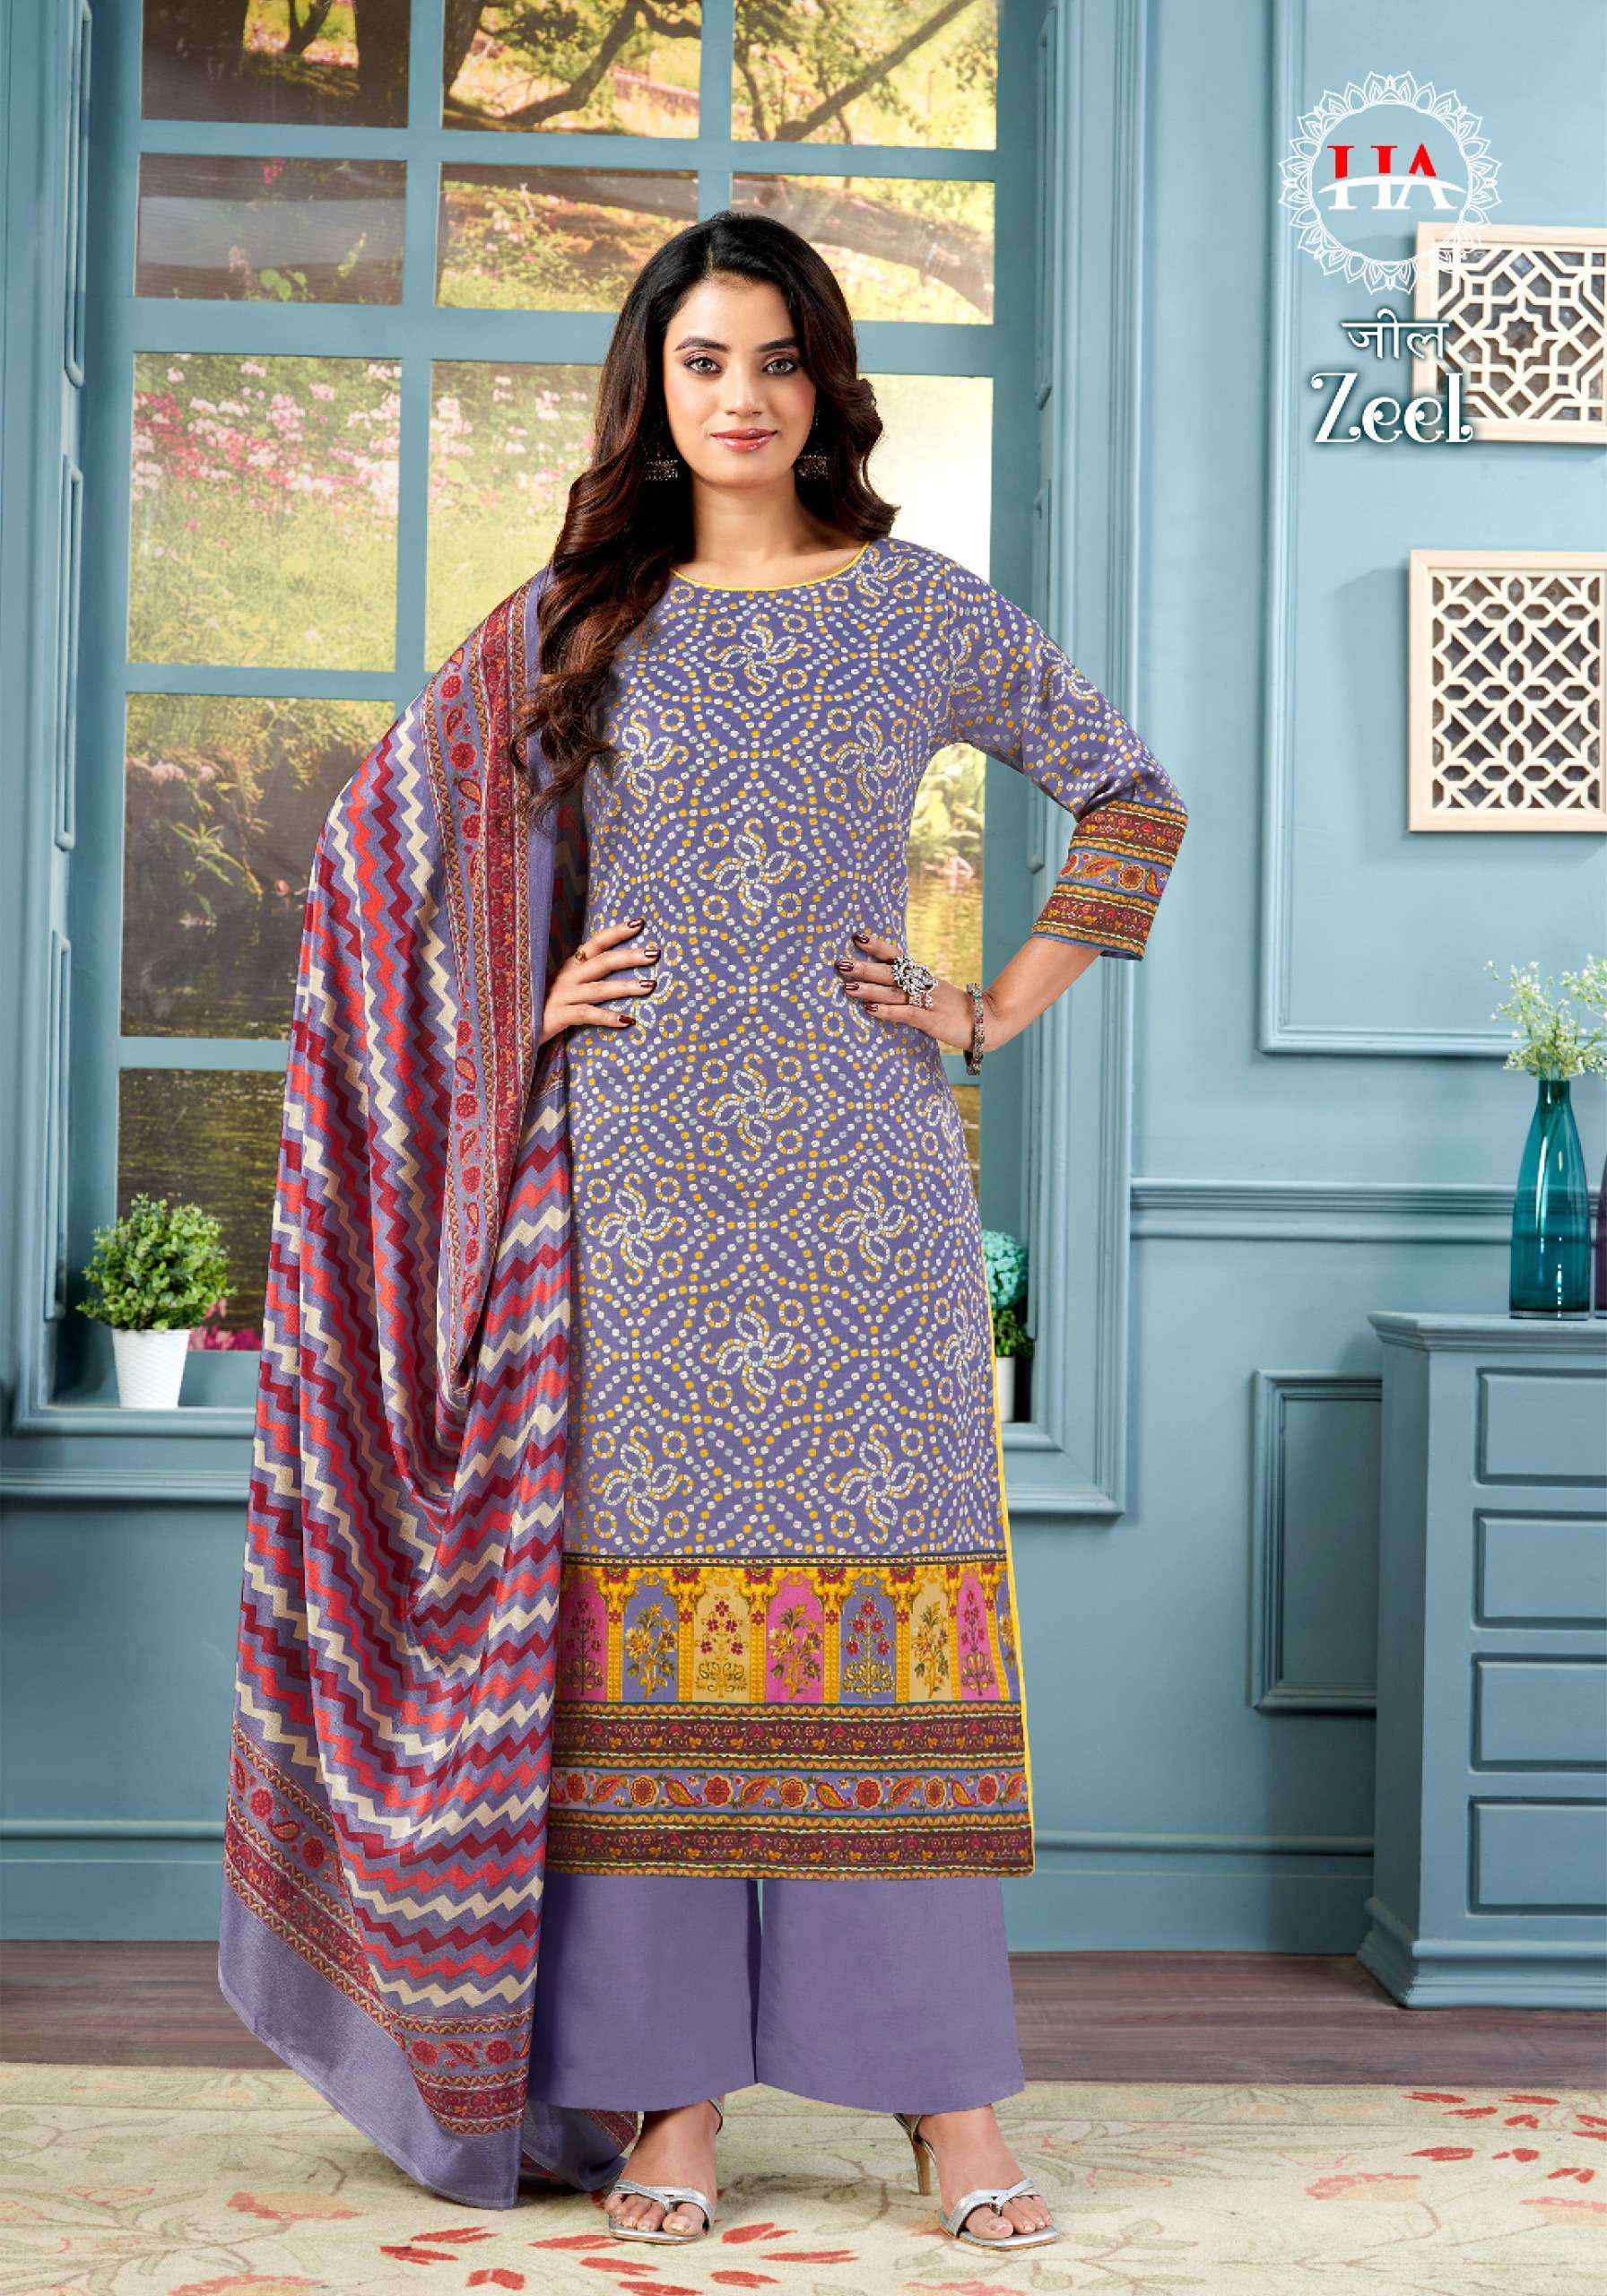 Harshit Fashion Hub Zeel Cotton Dress Material 6 pcs Catalogue